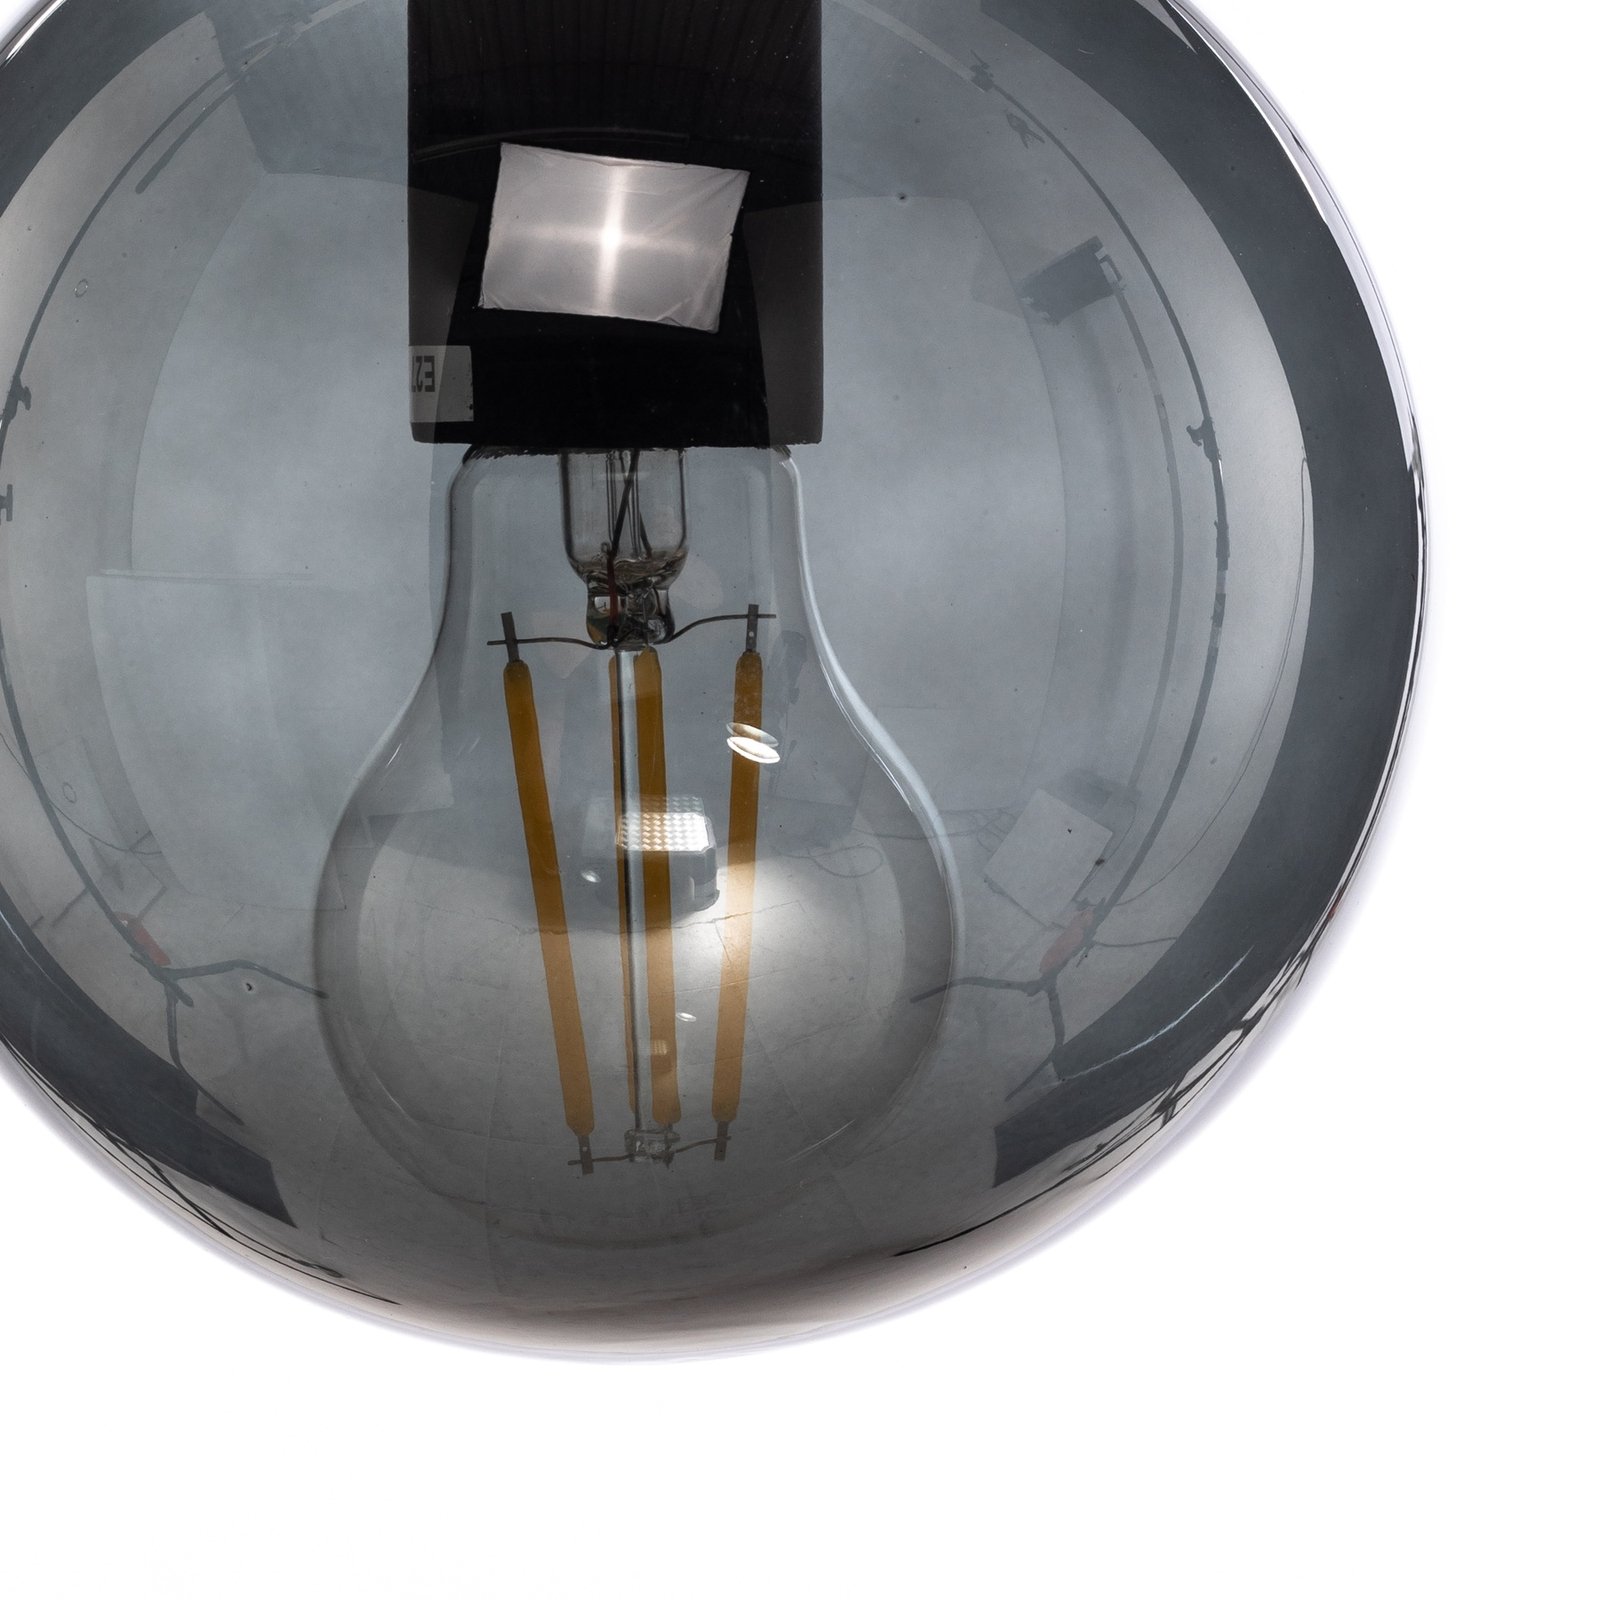 Efe 2155 pendant light, smoked glass, Ø 15 cm